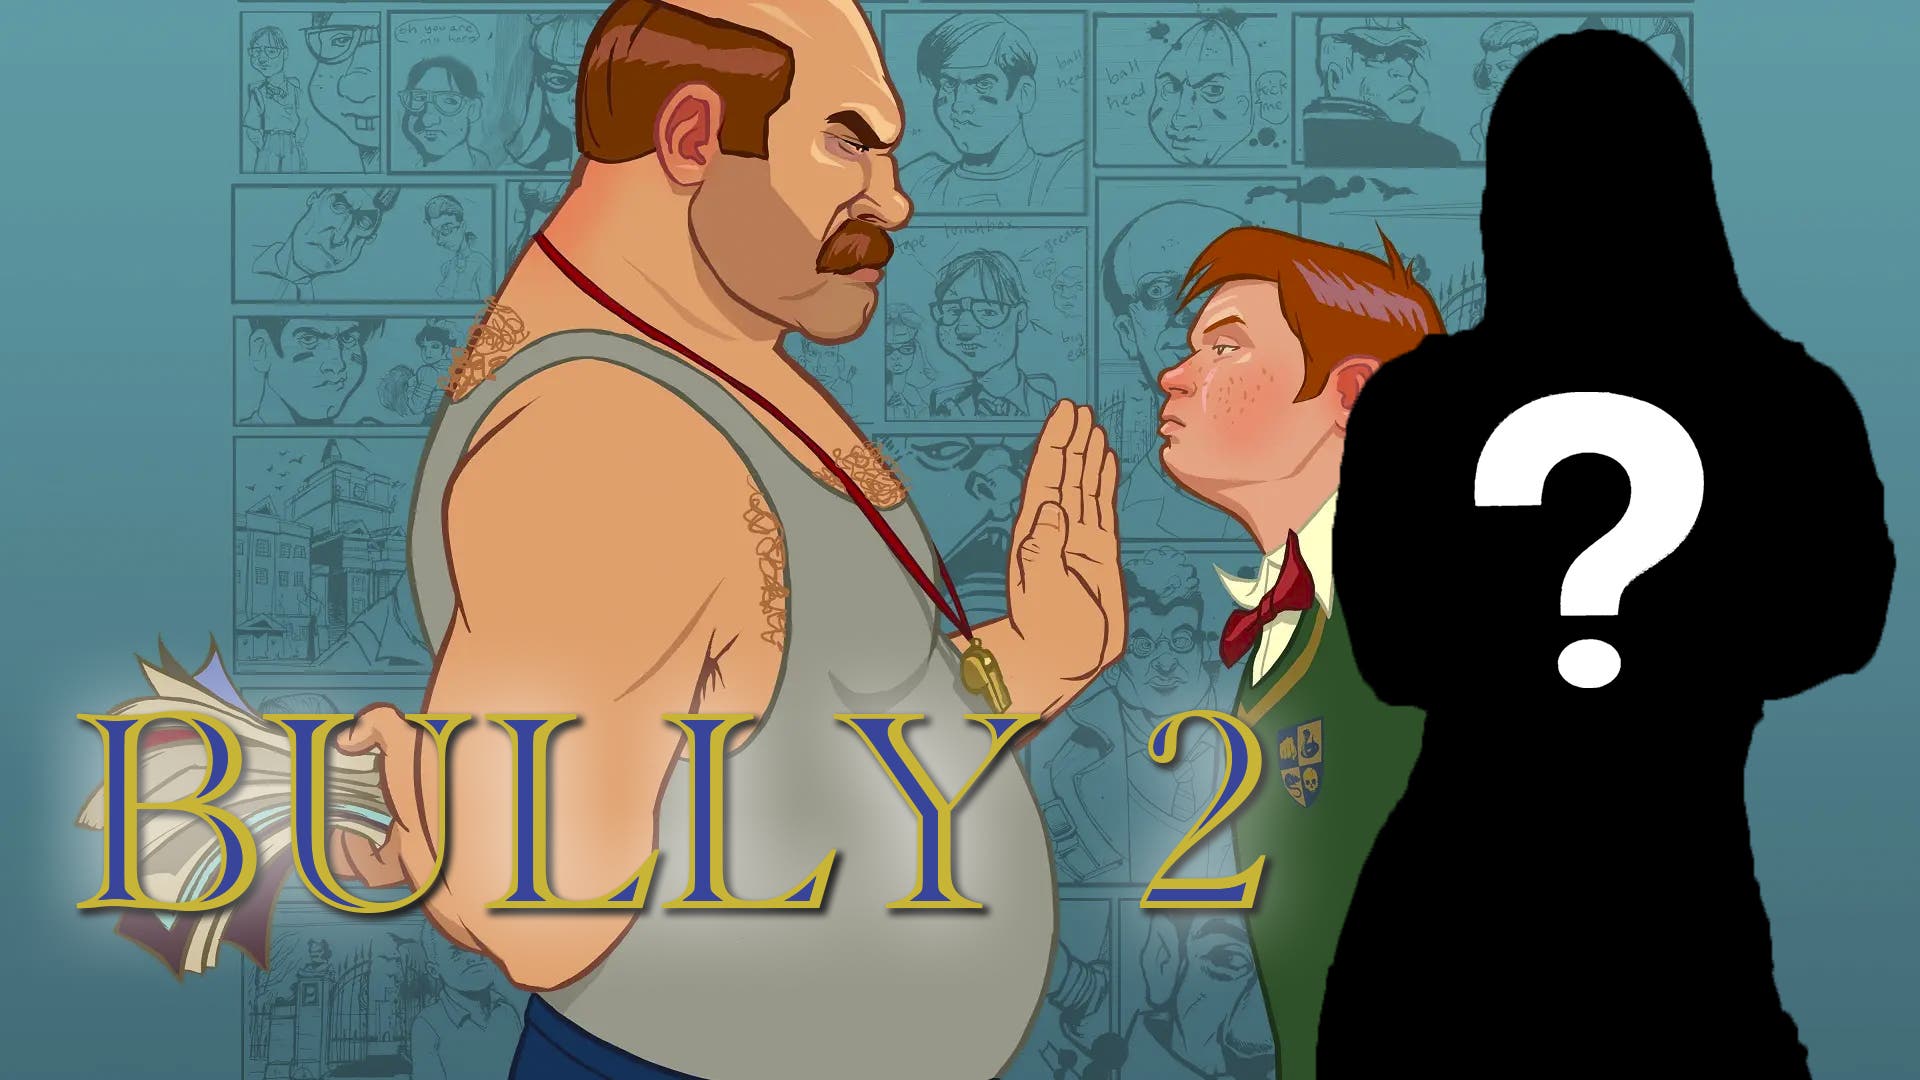 Un exdesarrollador revela interesantes detalles de Bully 2 antes